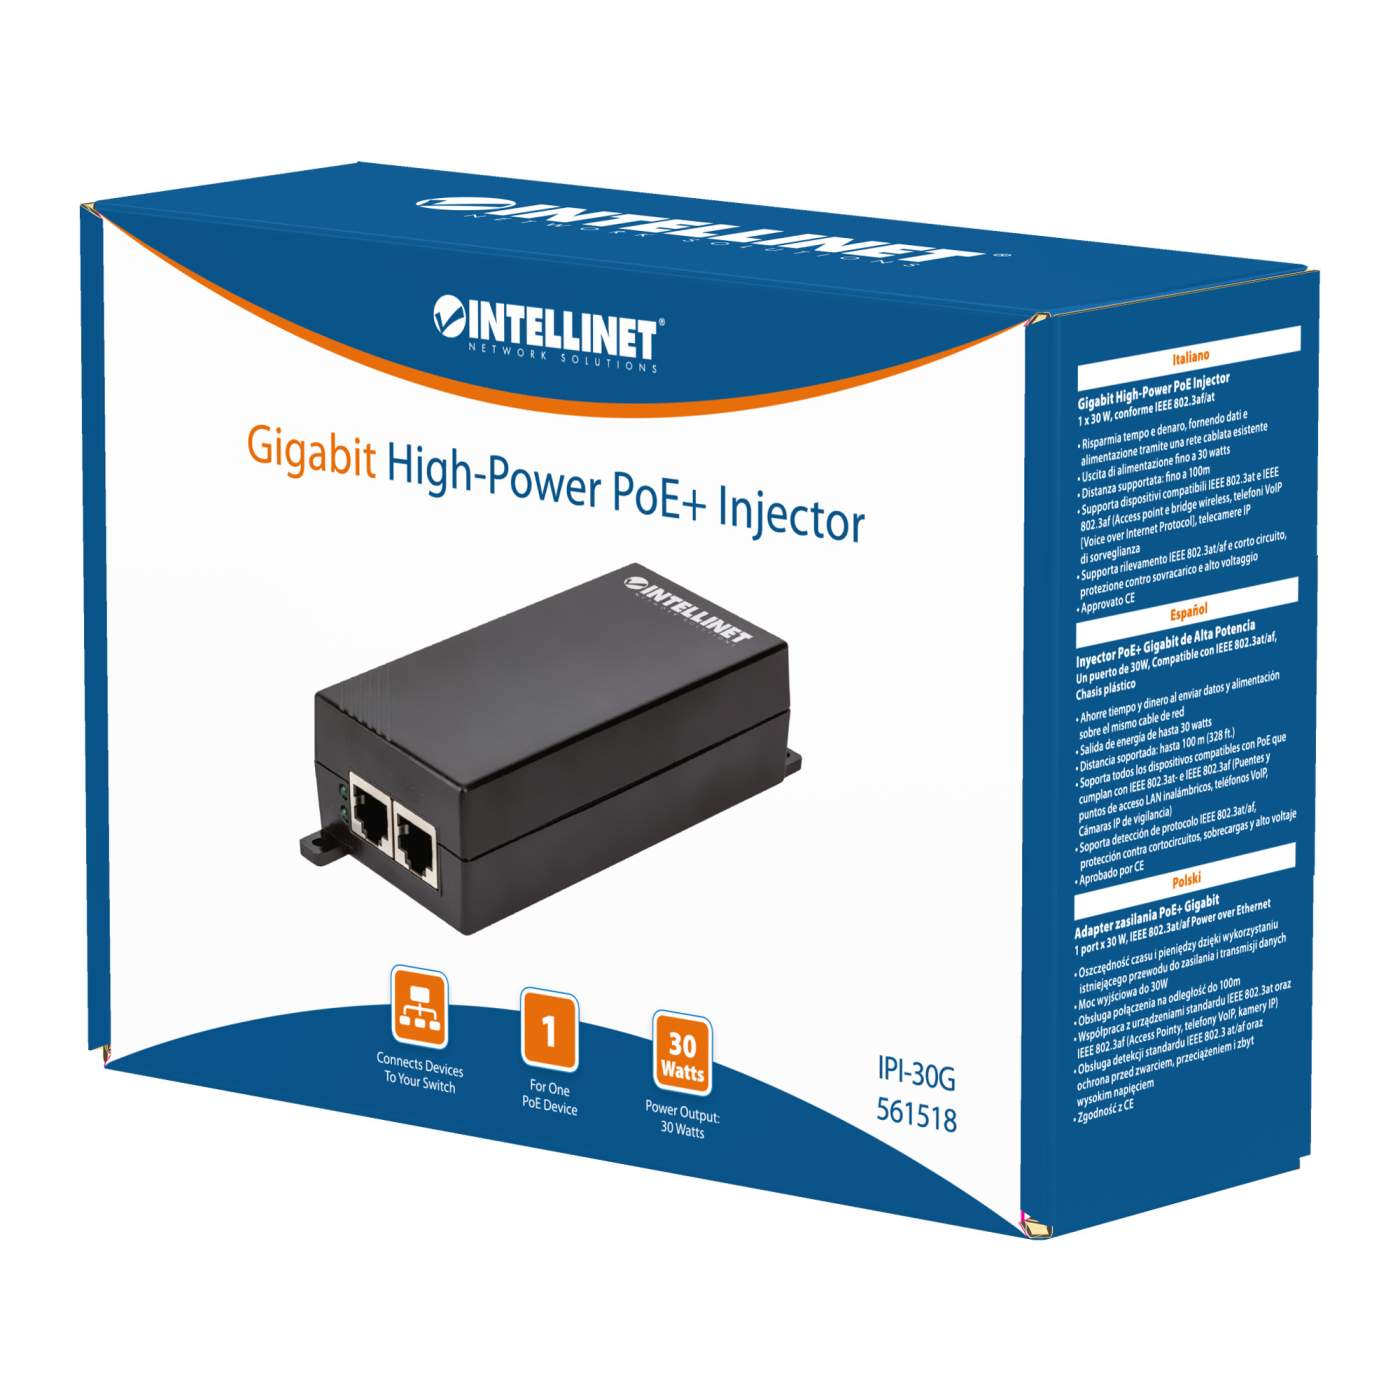 Gigabit High-Power PoE+ Injektor Packaging Image 2